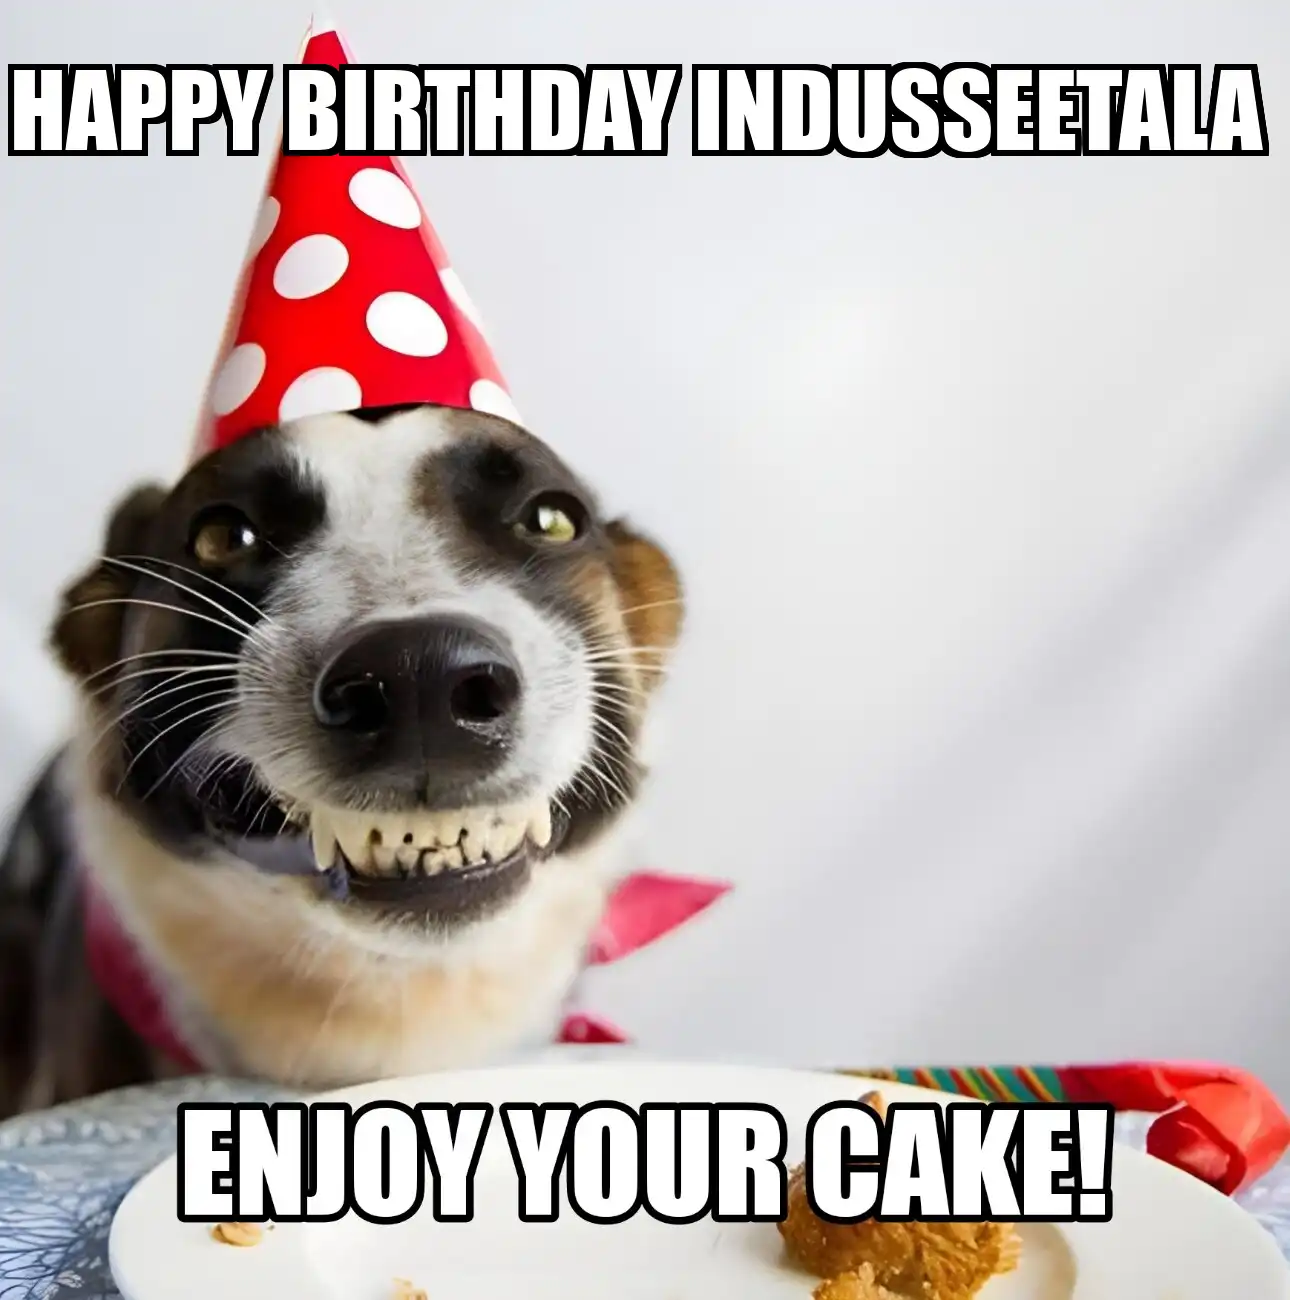 Happy Birthday Indusseetala Enjoy Your Cake Dog Meme